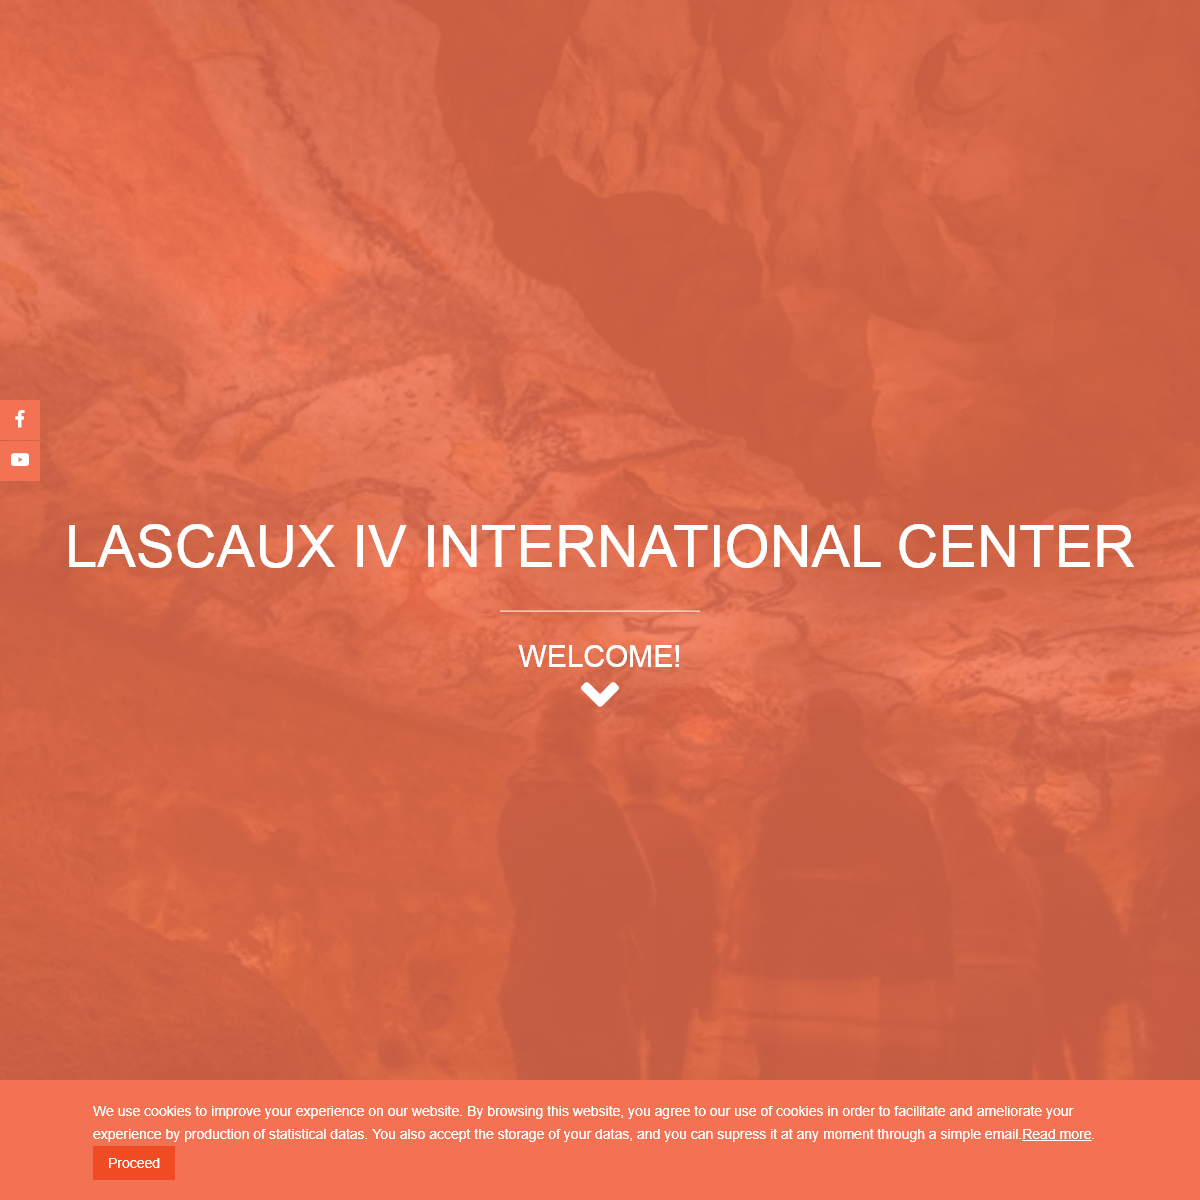 A complete backup of lascaux.fr